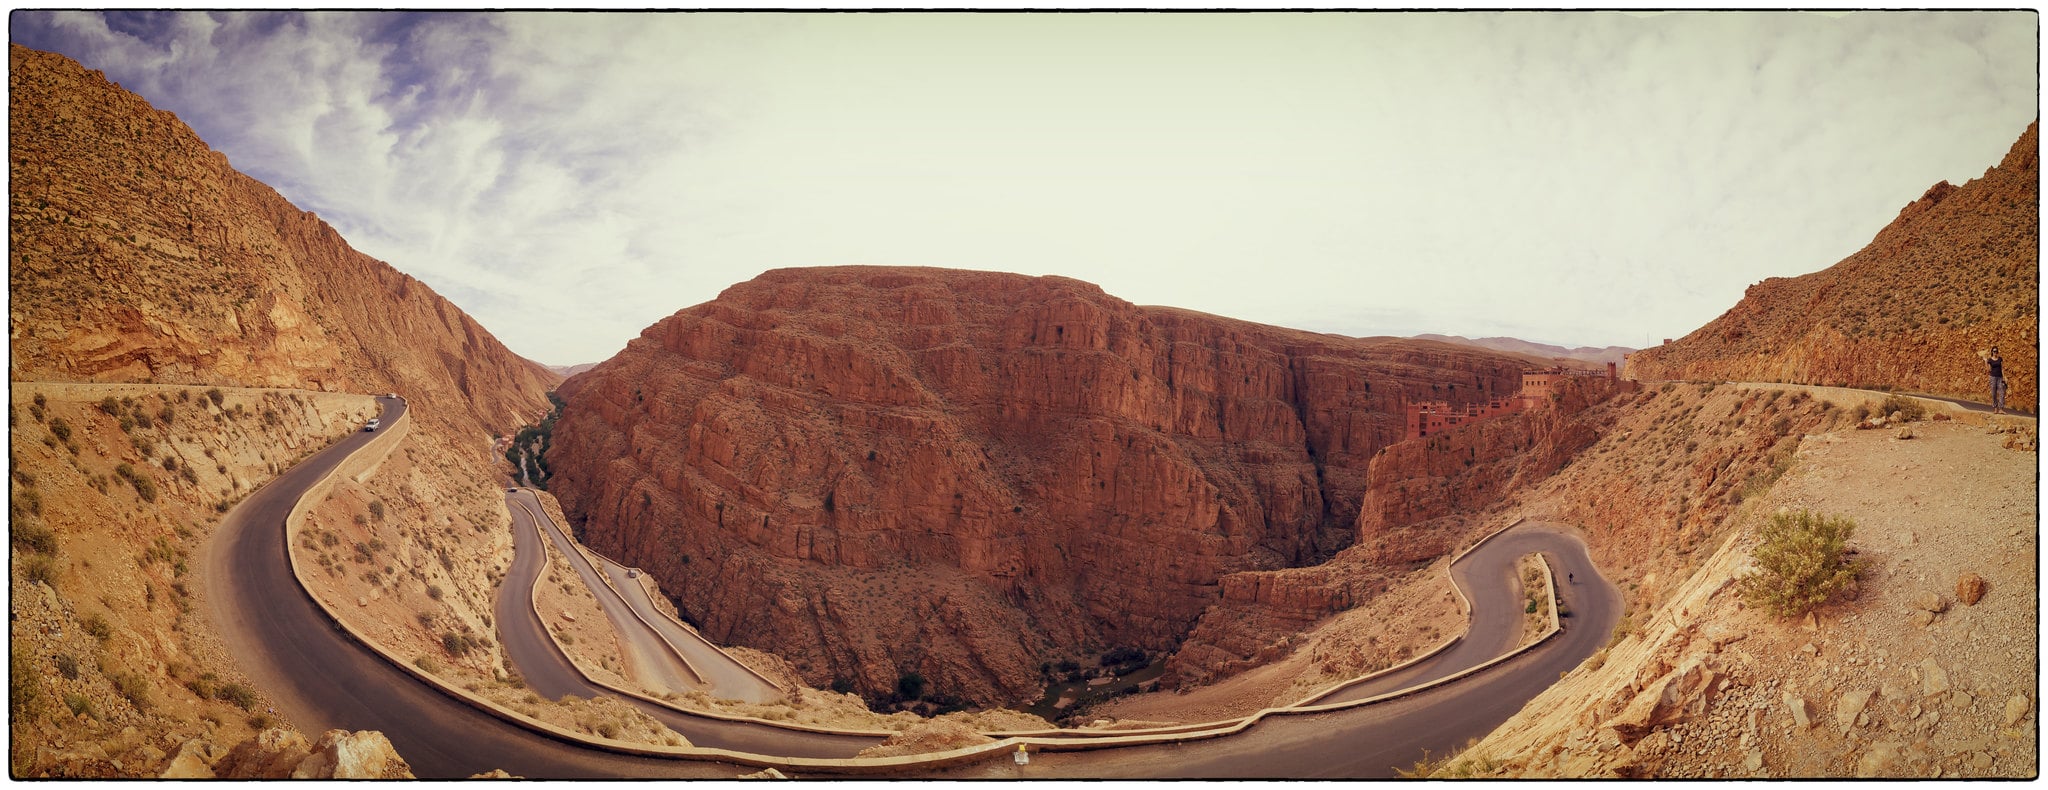 Dades Gorge by Car Road Trip Morocco